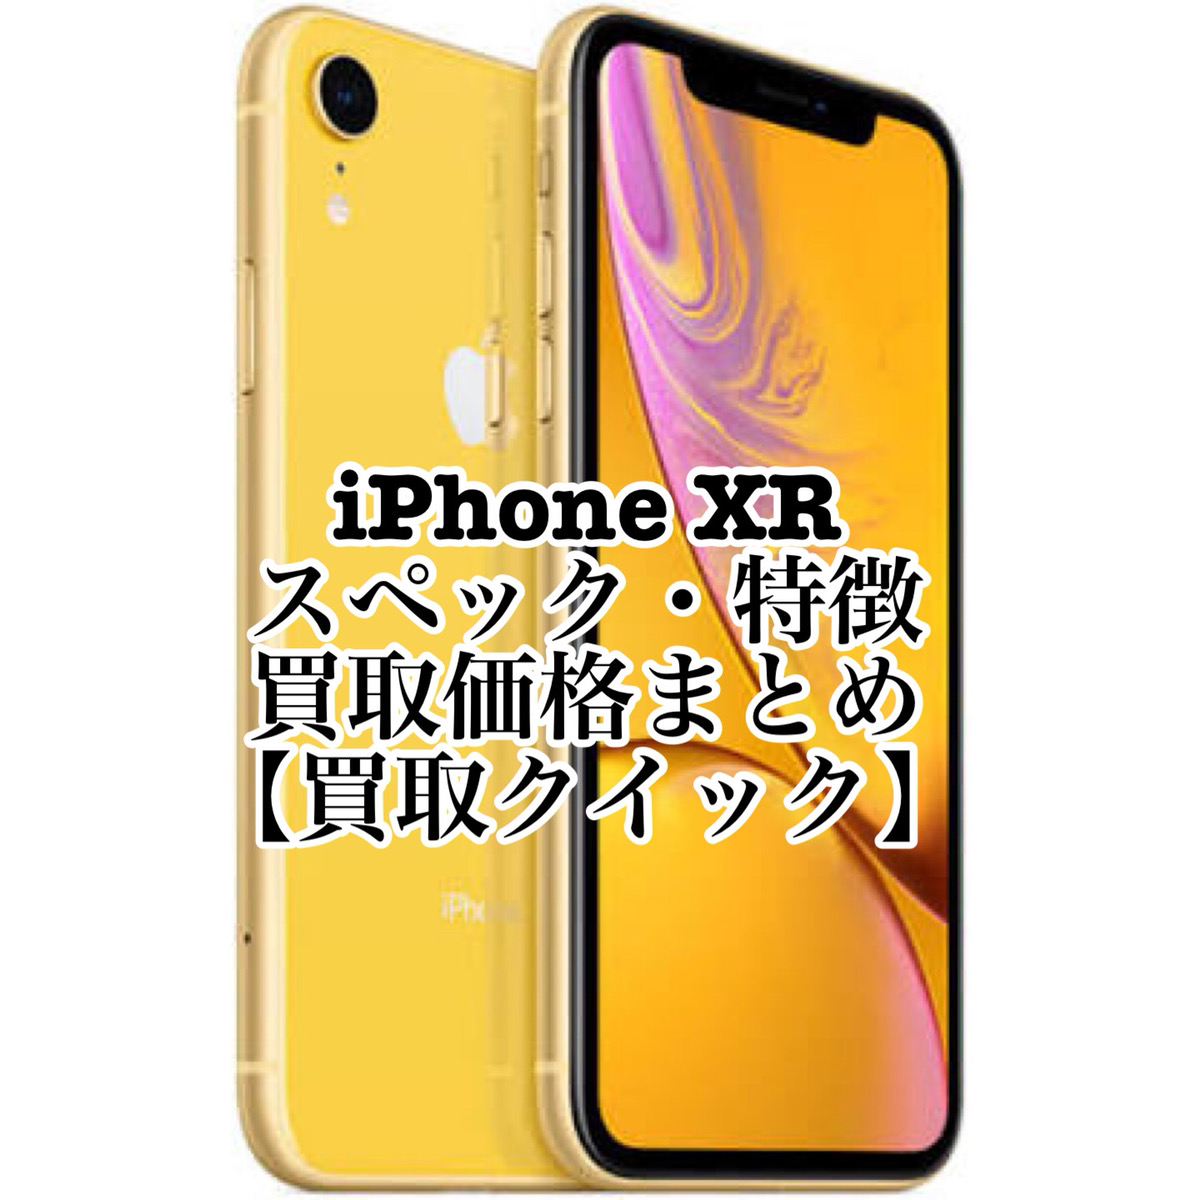 iPhone XR のスペックや特徴、買取価格まとめ【買取クイック